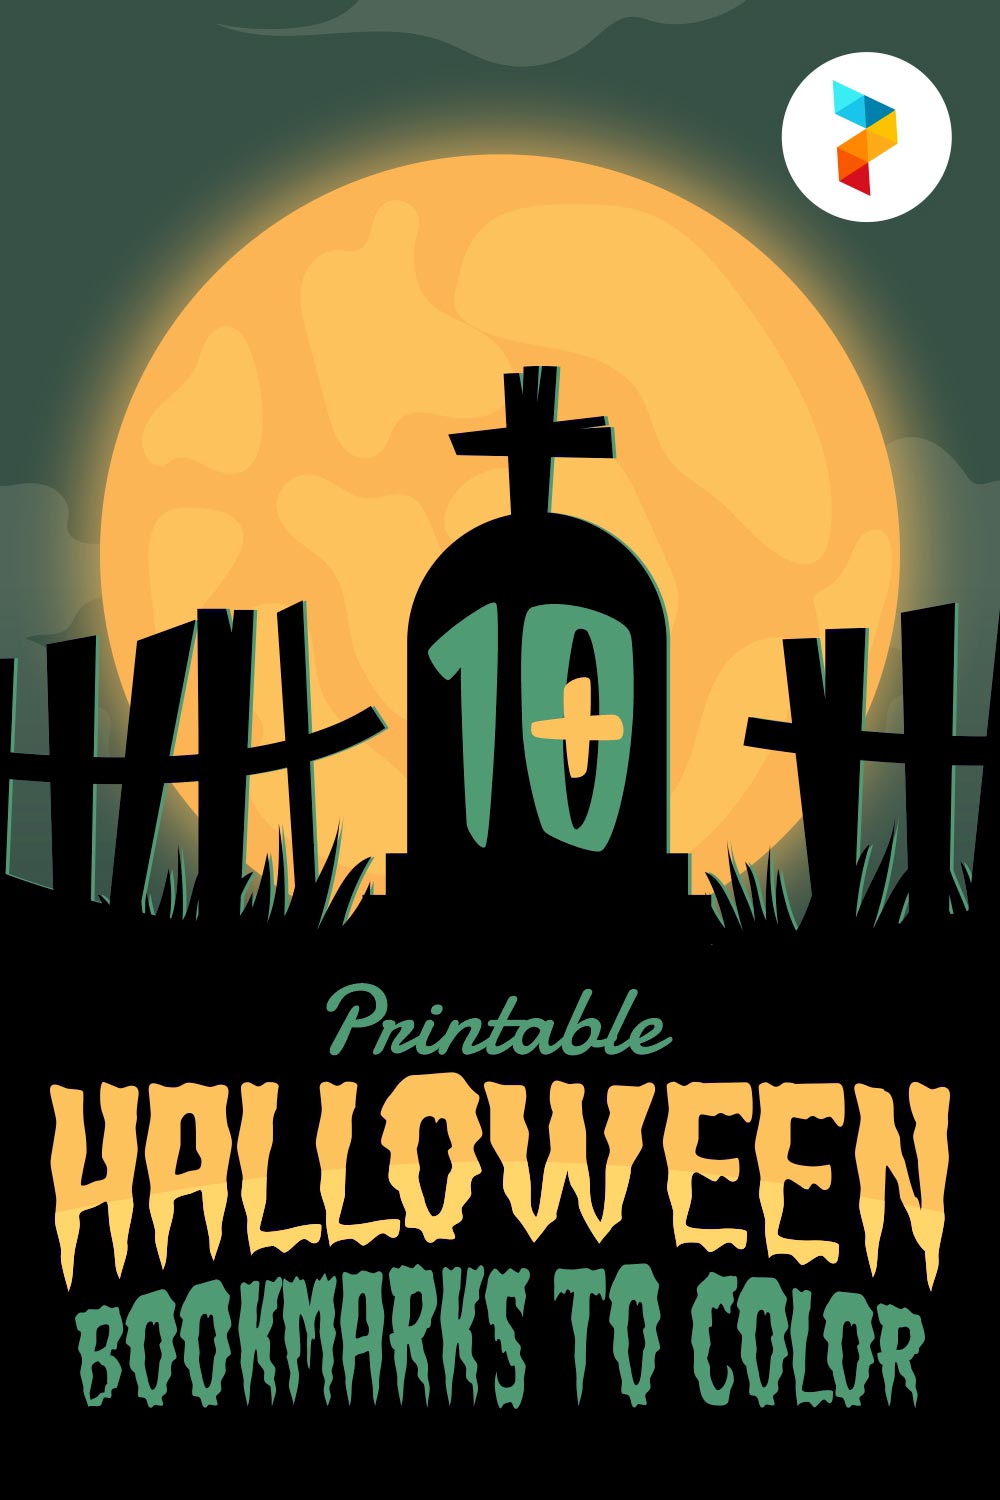 Printable Halloween Bookmarks To Color